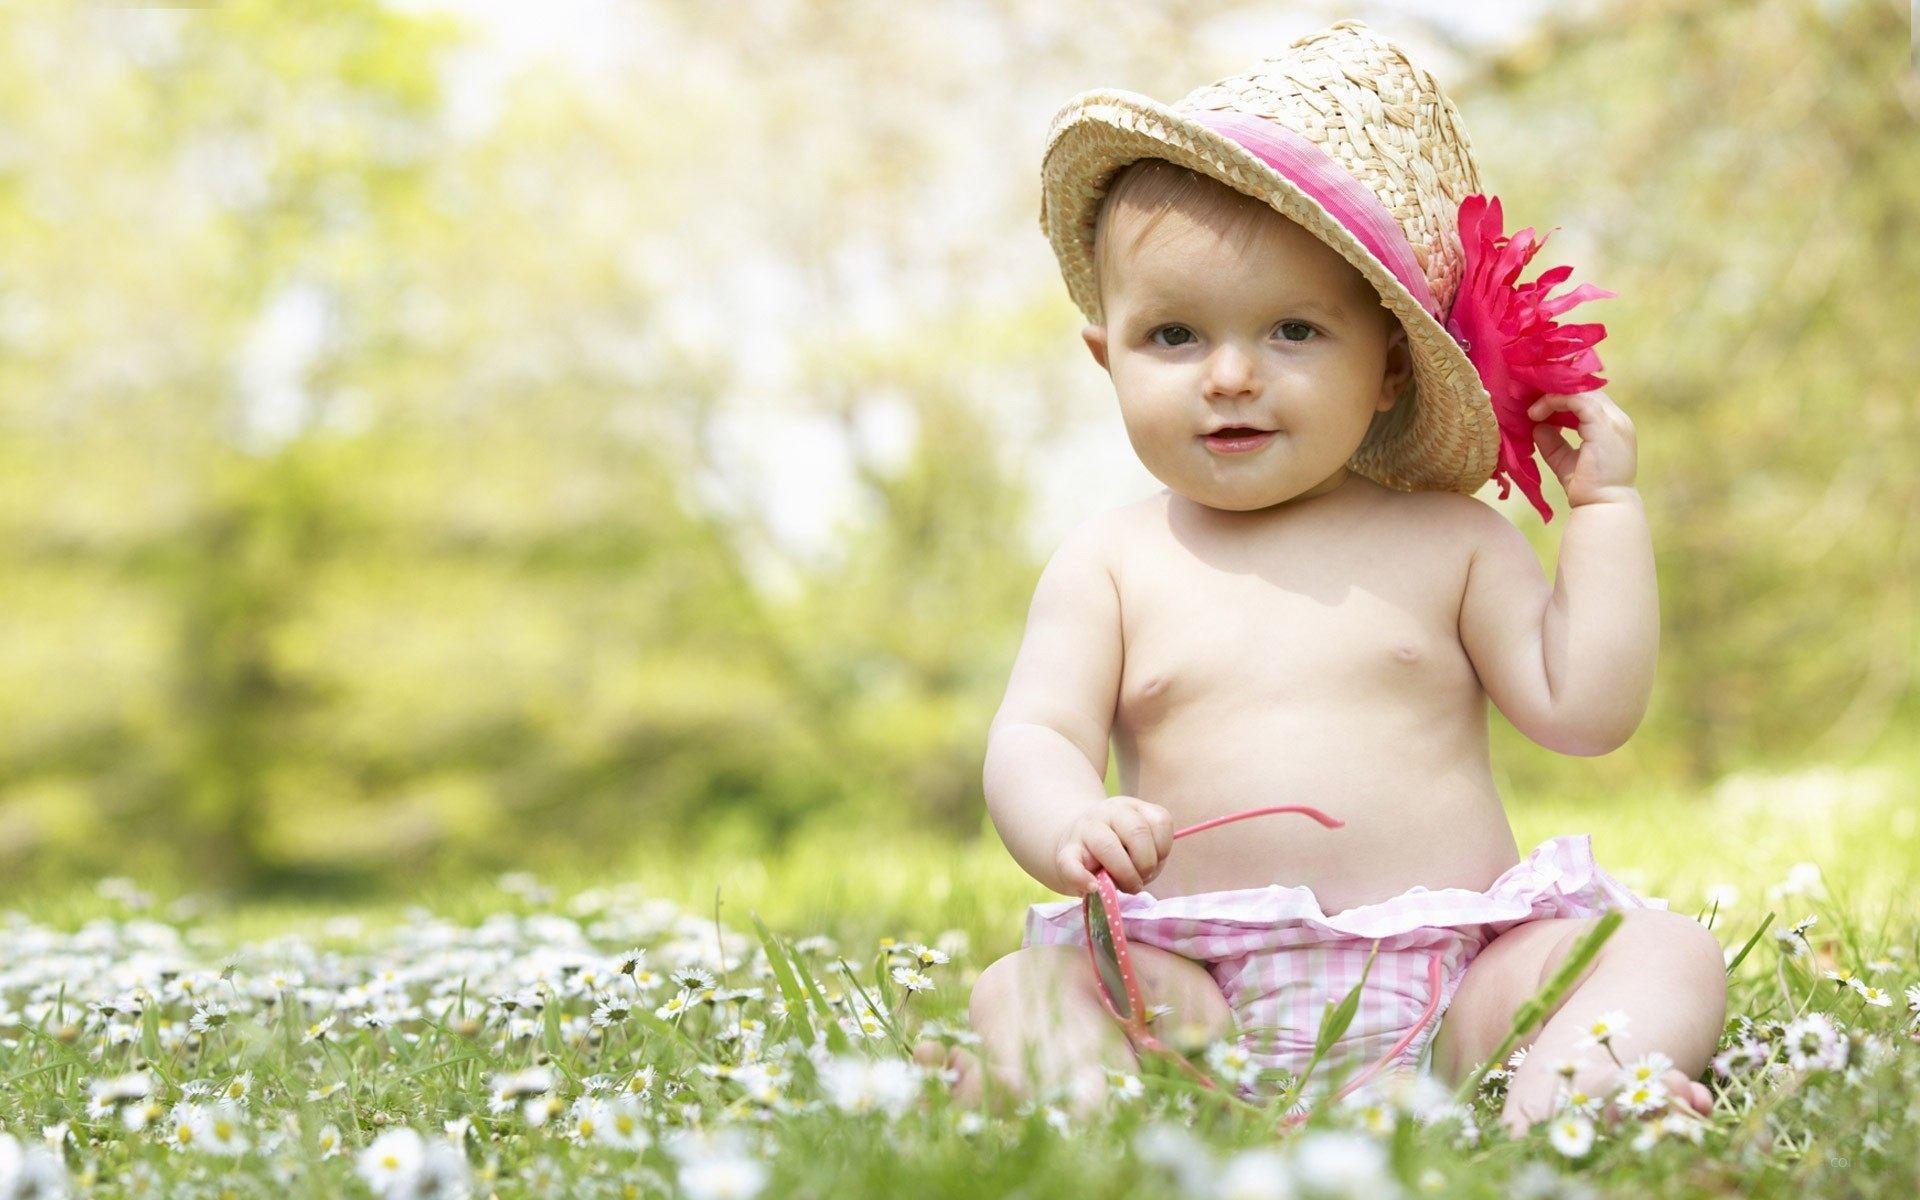 Cute Baby Pics Wallpaper 1920x1200 HD 1080p. Cute baby